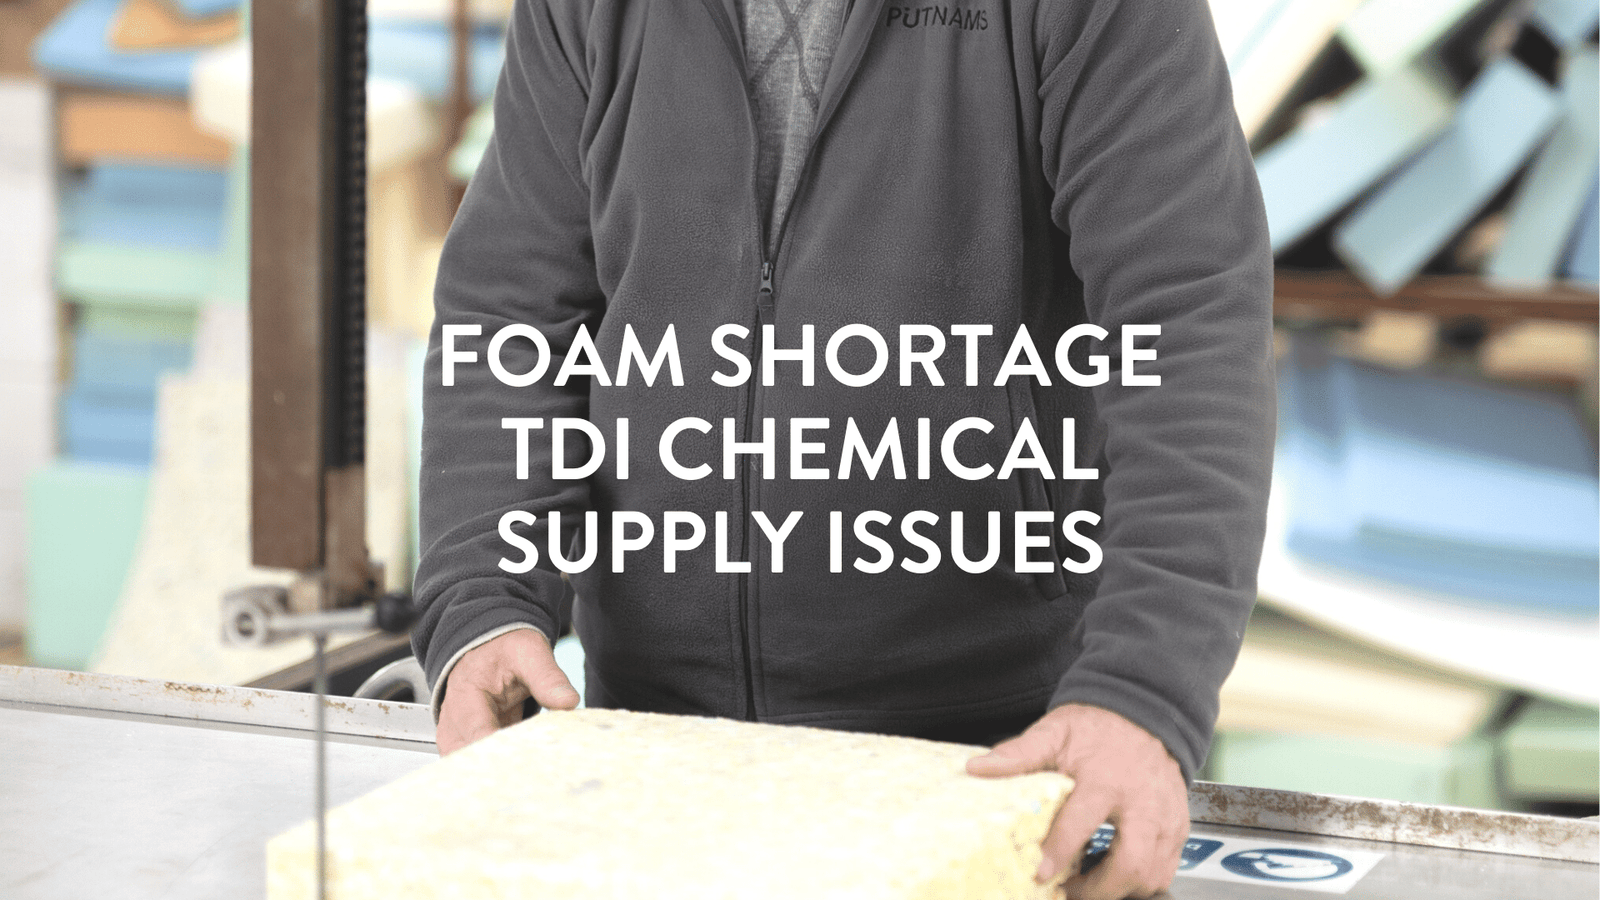 foam shortage tdi chemical supply issues uk Polyurethane Foam Shortages